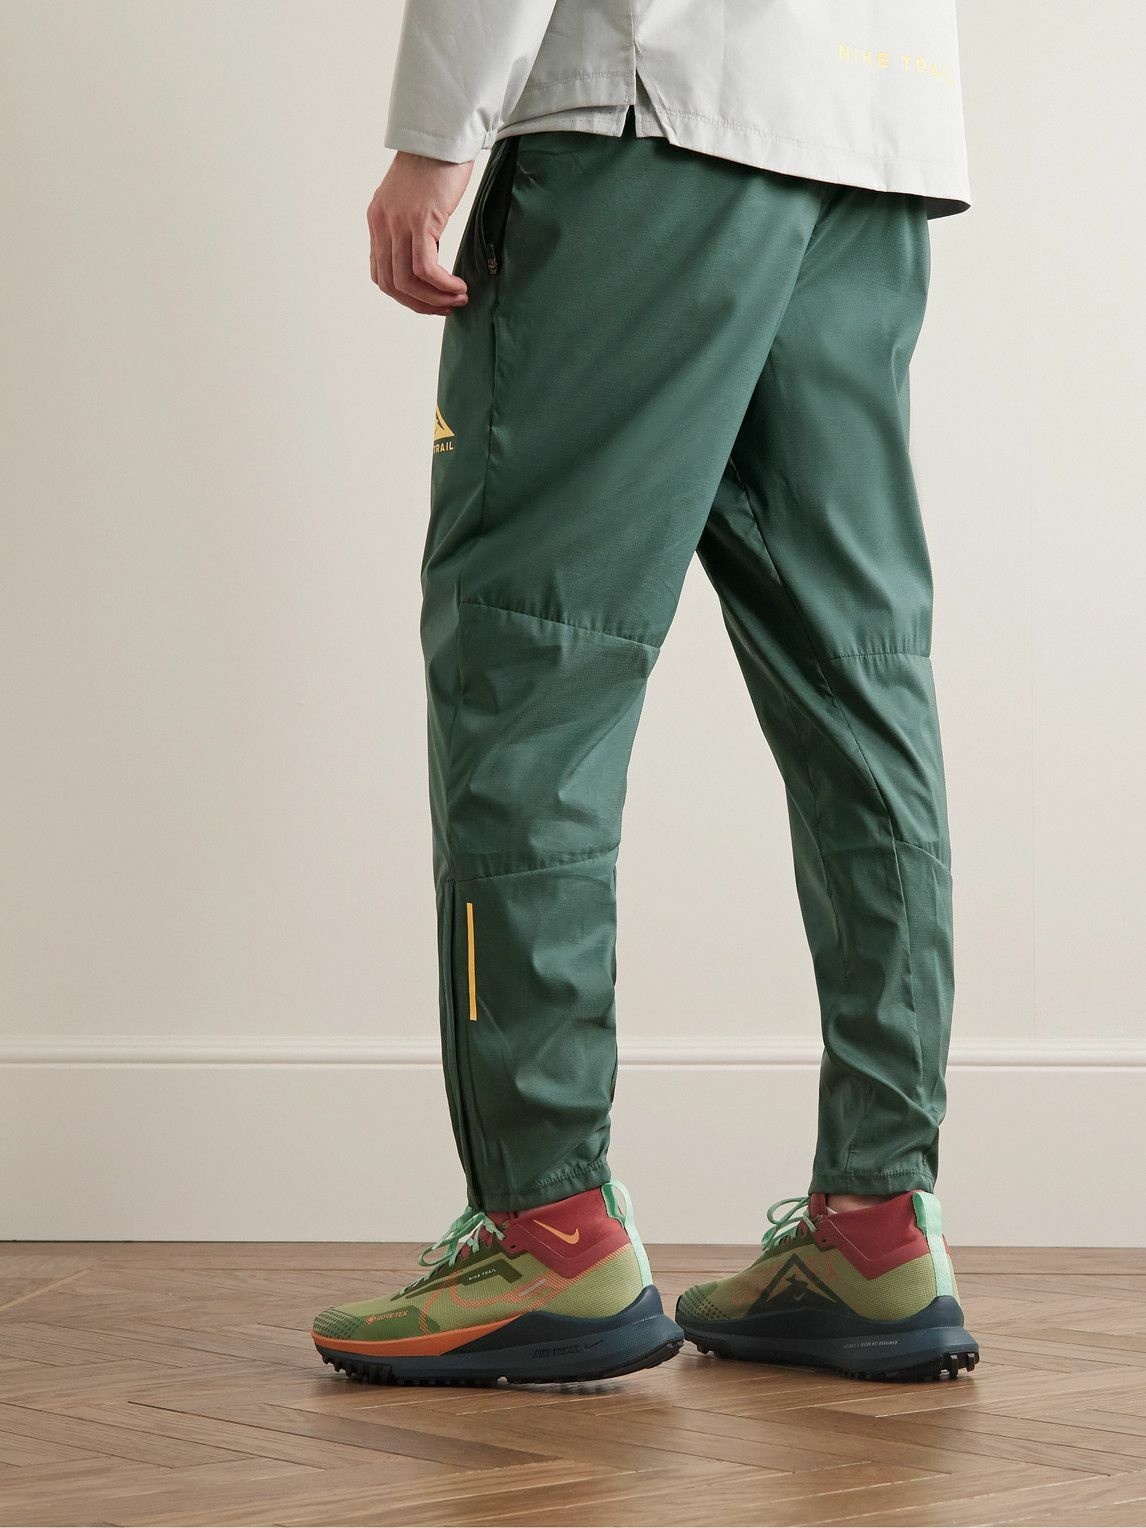 Nike Dri-FIT Trail Phenom Elite Pants - Men's